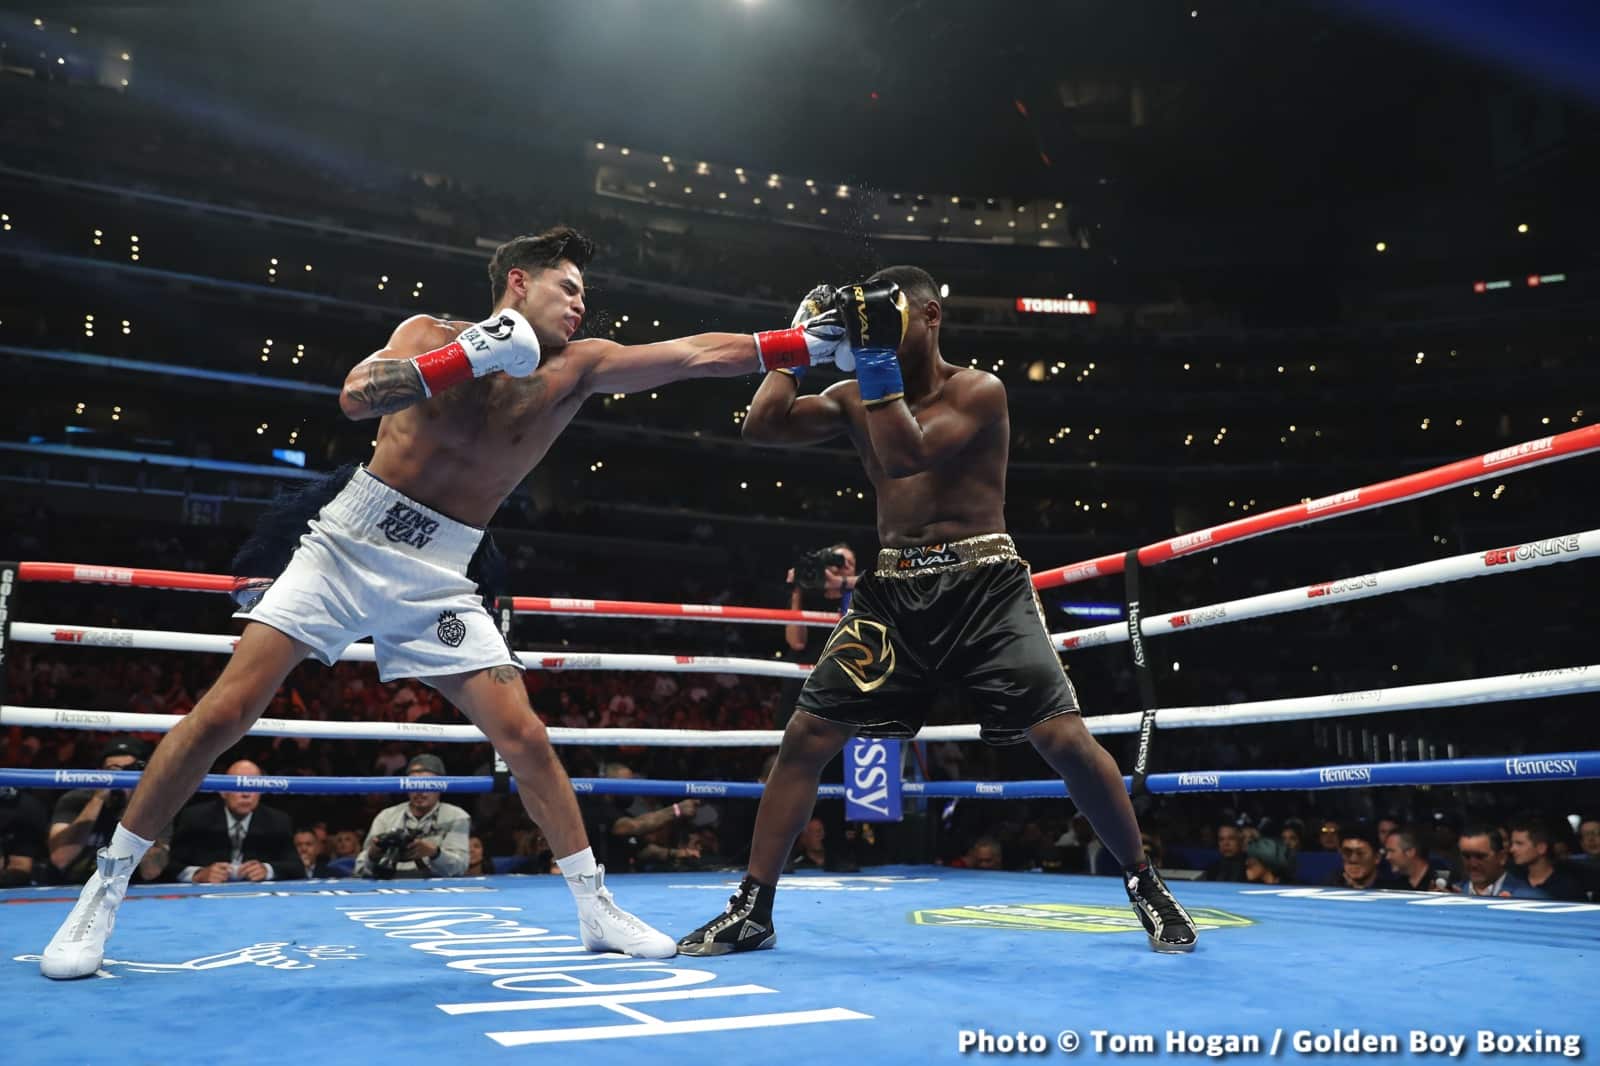 Image: "Ryan Garcia possesses much heavier punch" than Tank Davis says Joe Goosen